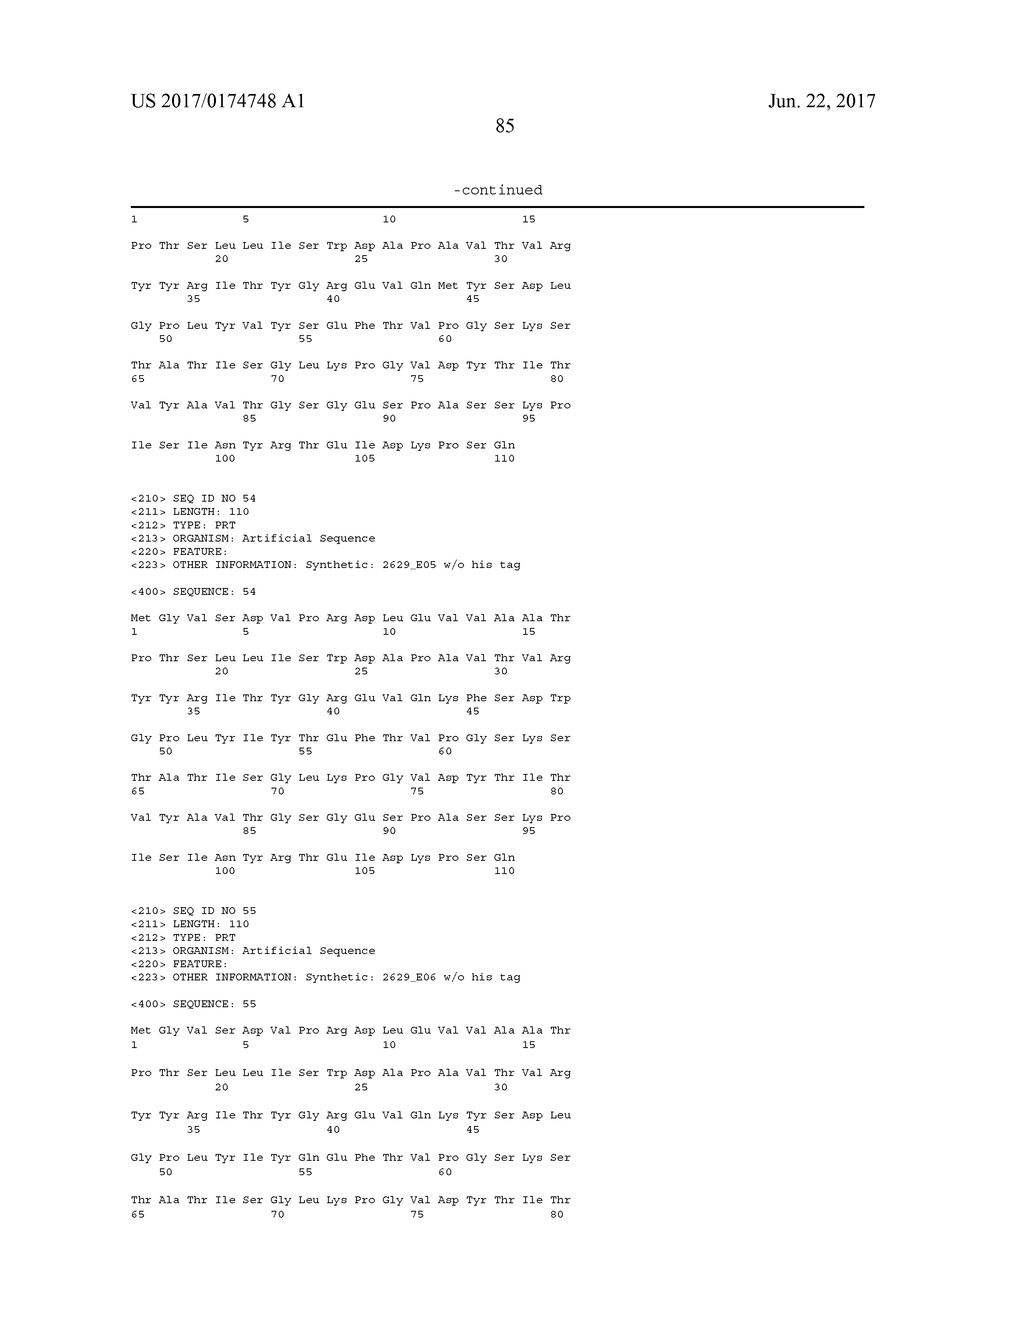 SERUM ALBUMIN-BINDING FIBRONECTIN TYPE III DOMAINS - diagram, schematic, and image 106